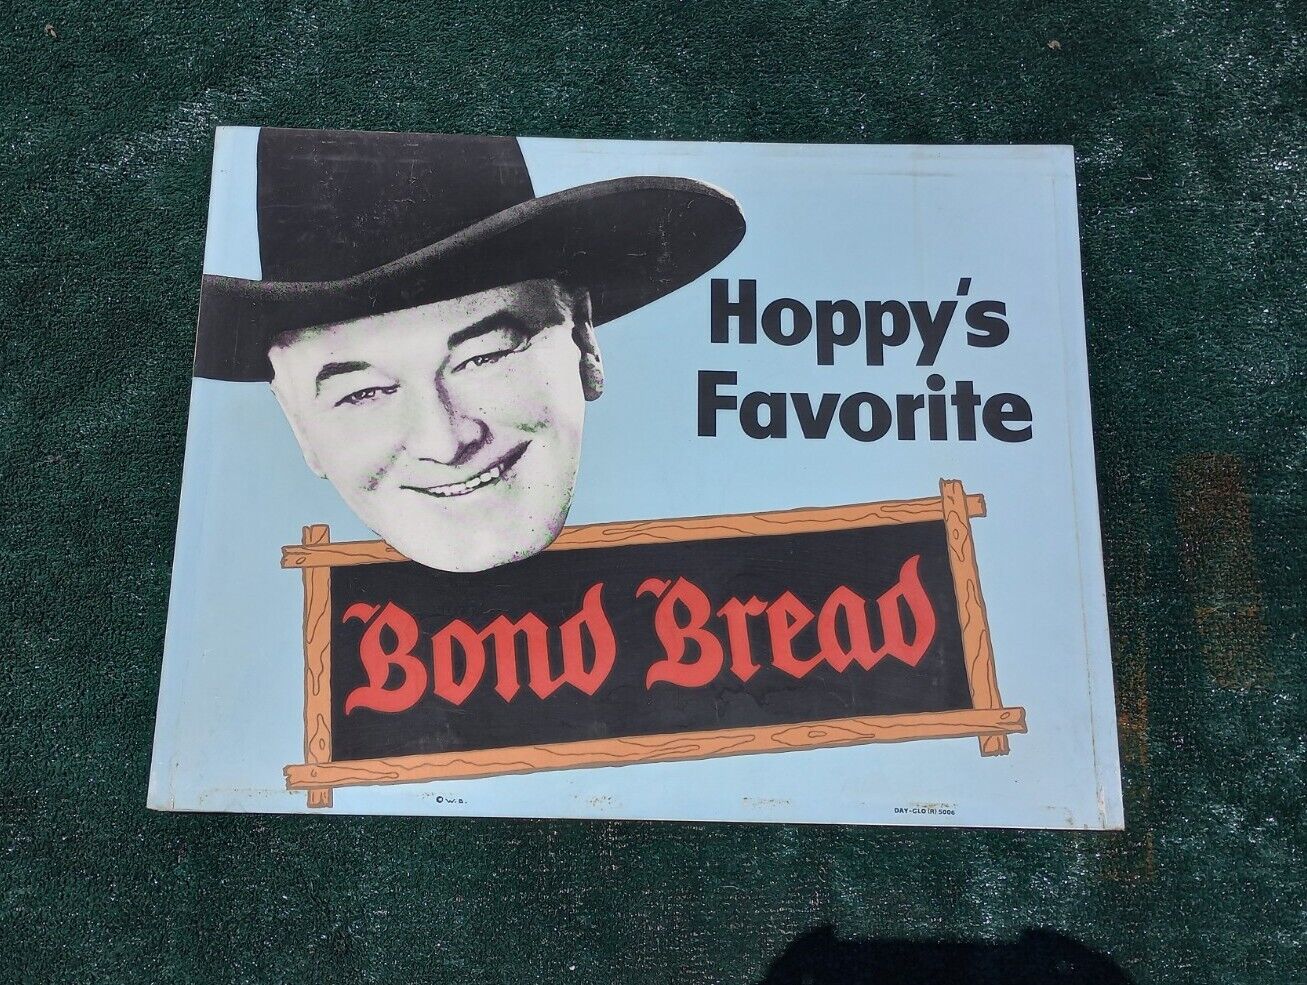 1950s Bond Bread Cardboard Sign. Hoppy's Favorite. 21x27